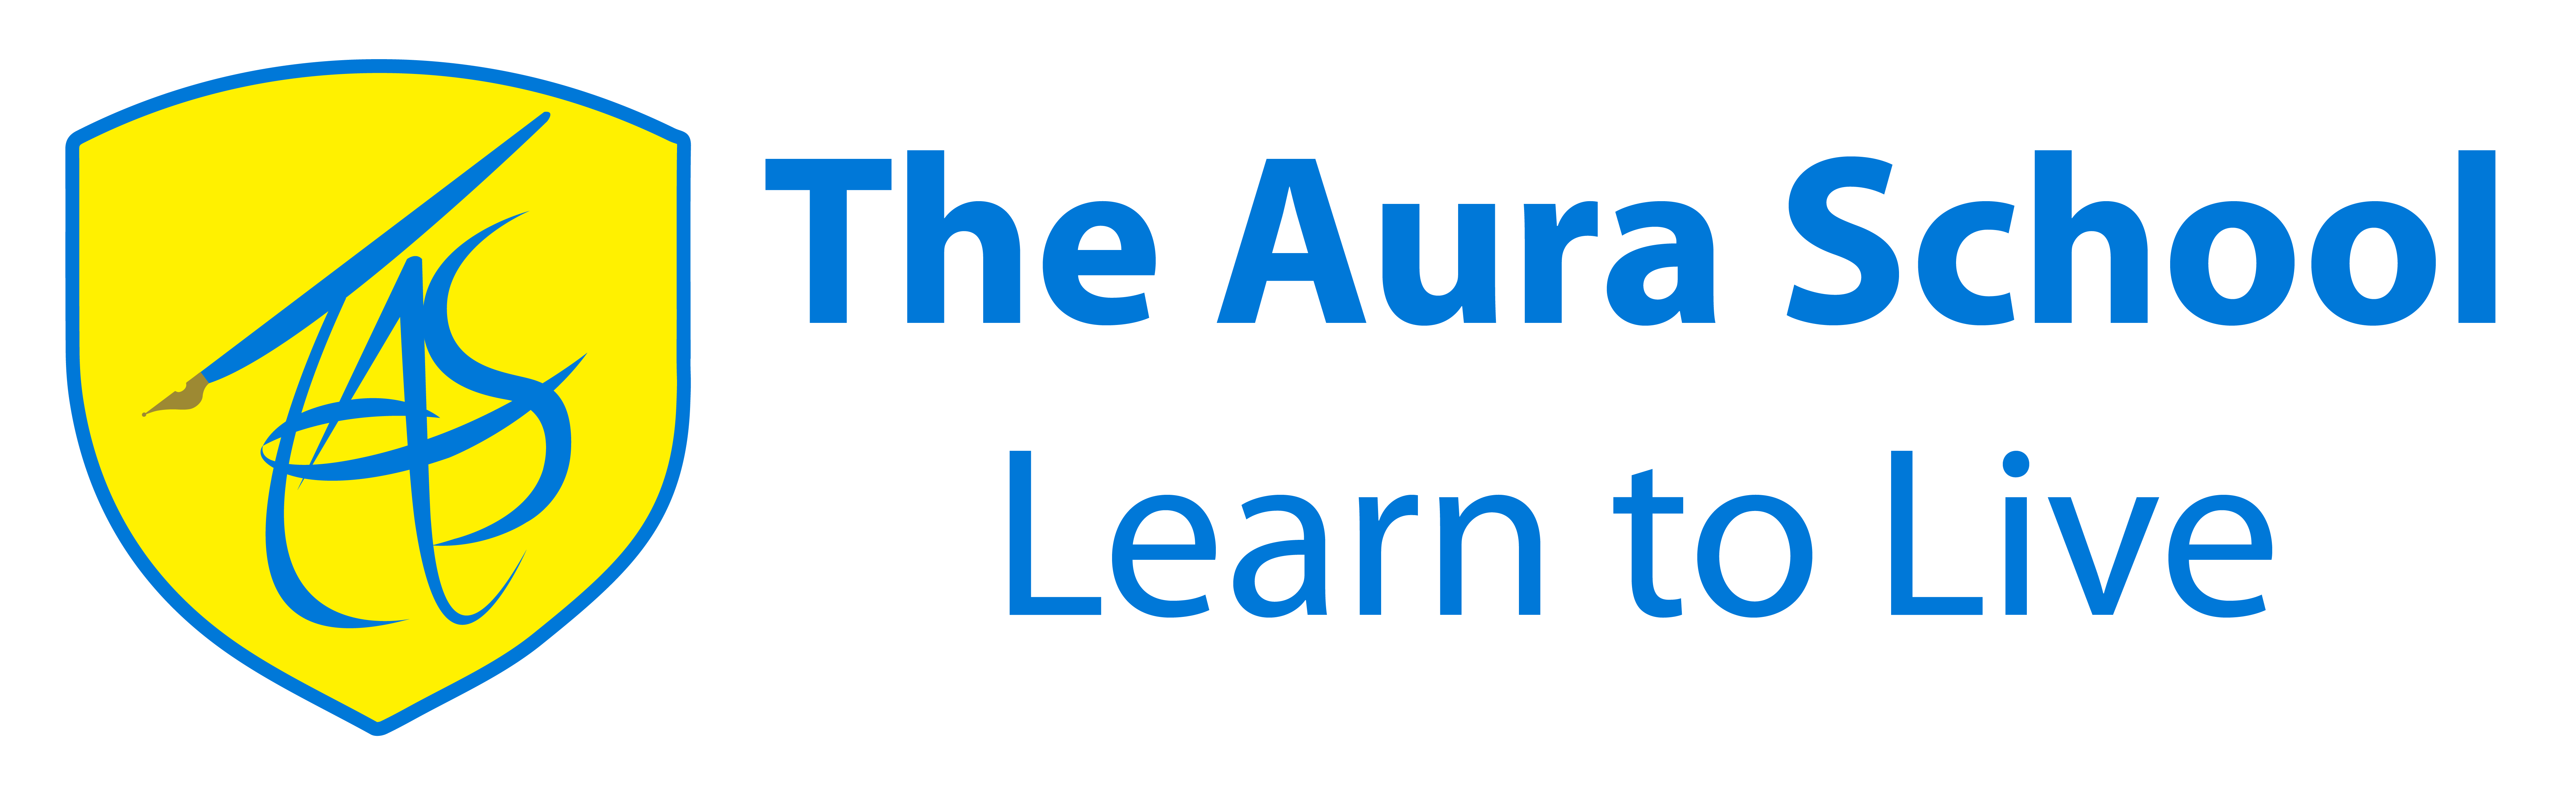 The Aura School